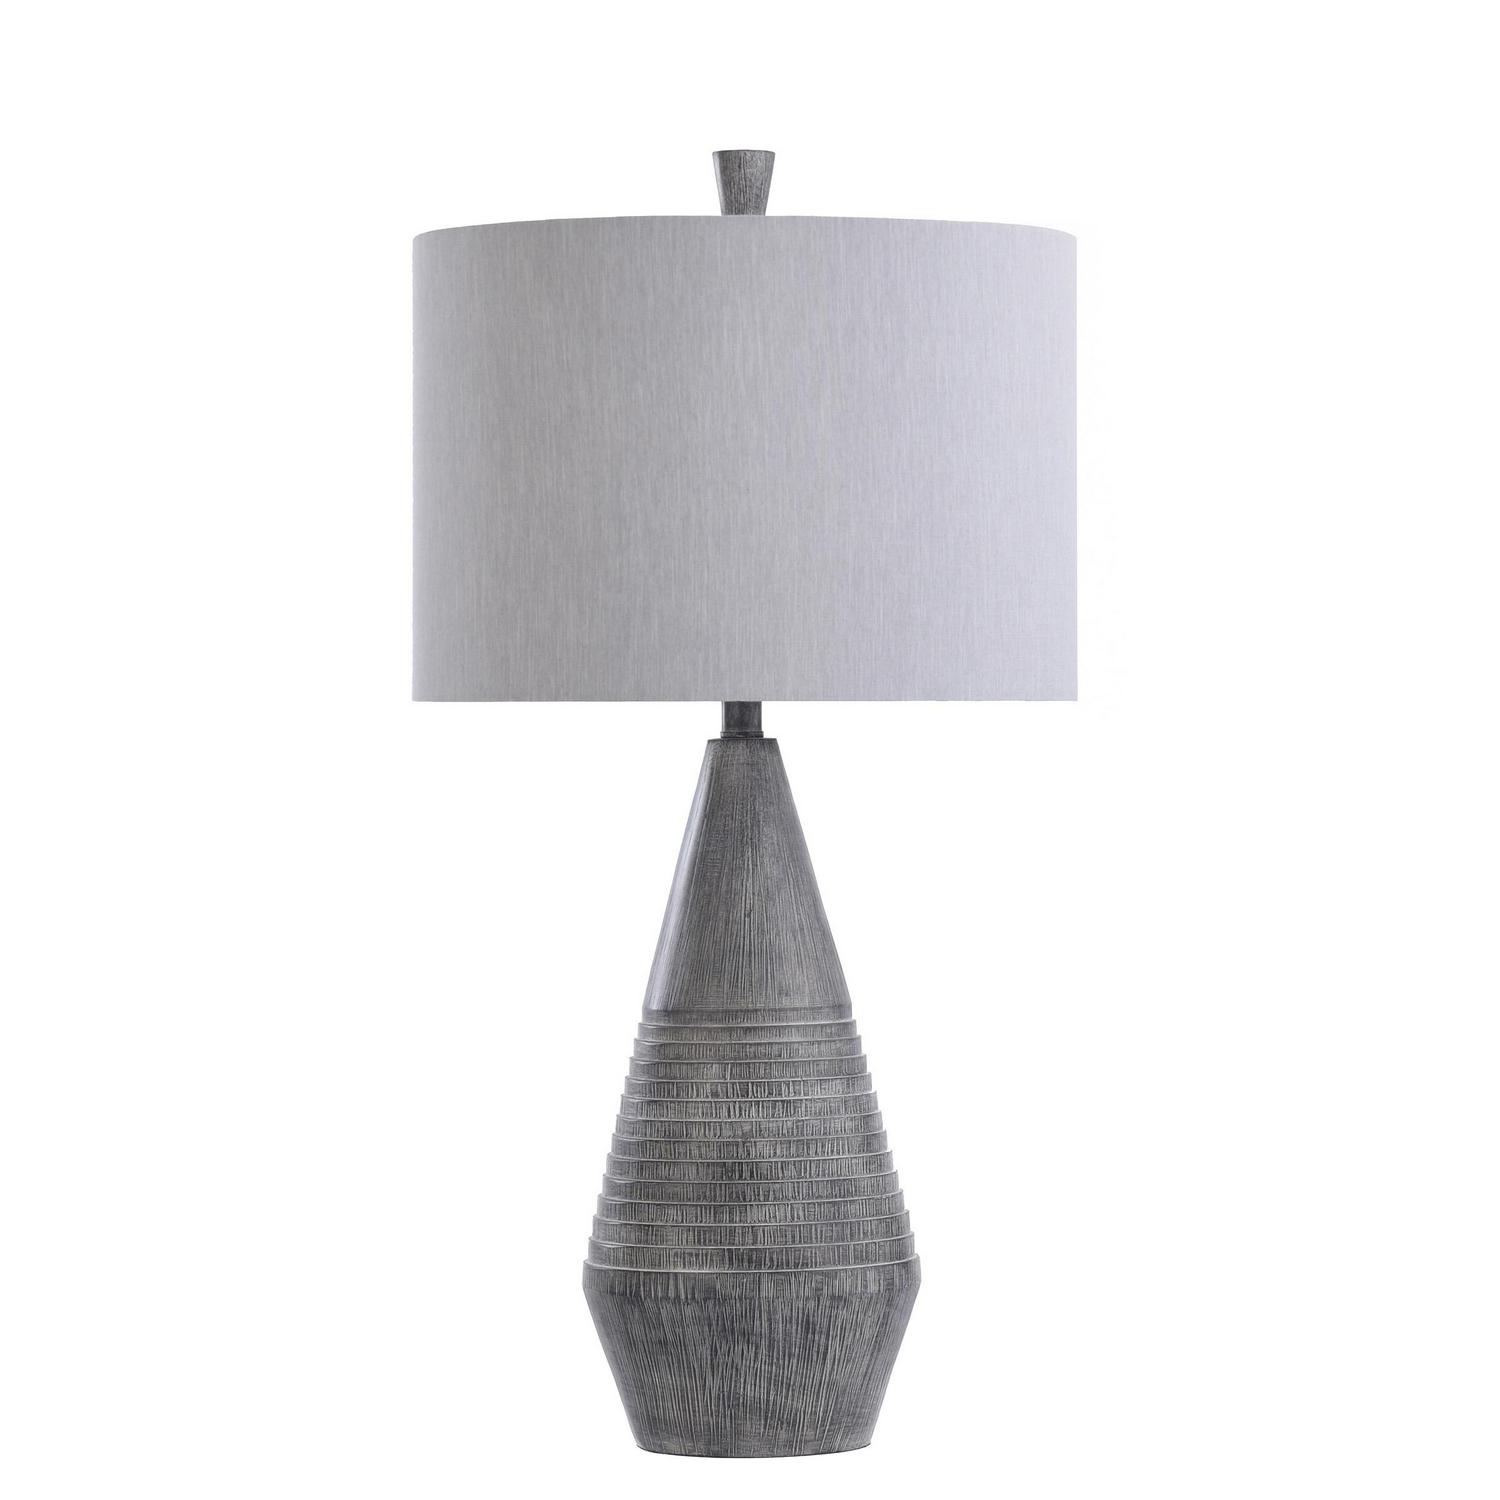 Tipton Farmhouse Tapered Molded Table Lamp Faux Wood Finish， Light Gray Fabric Shade